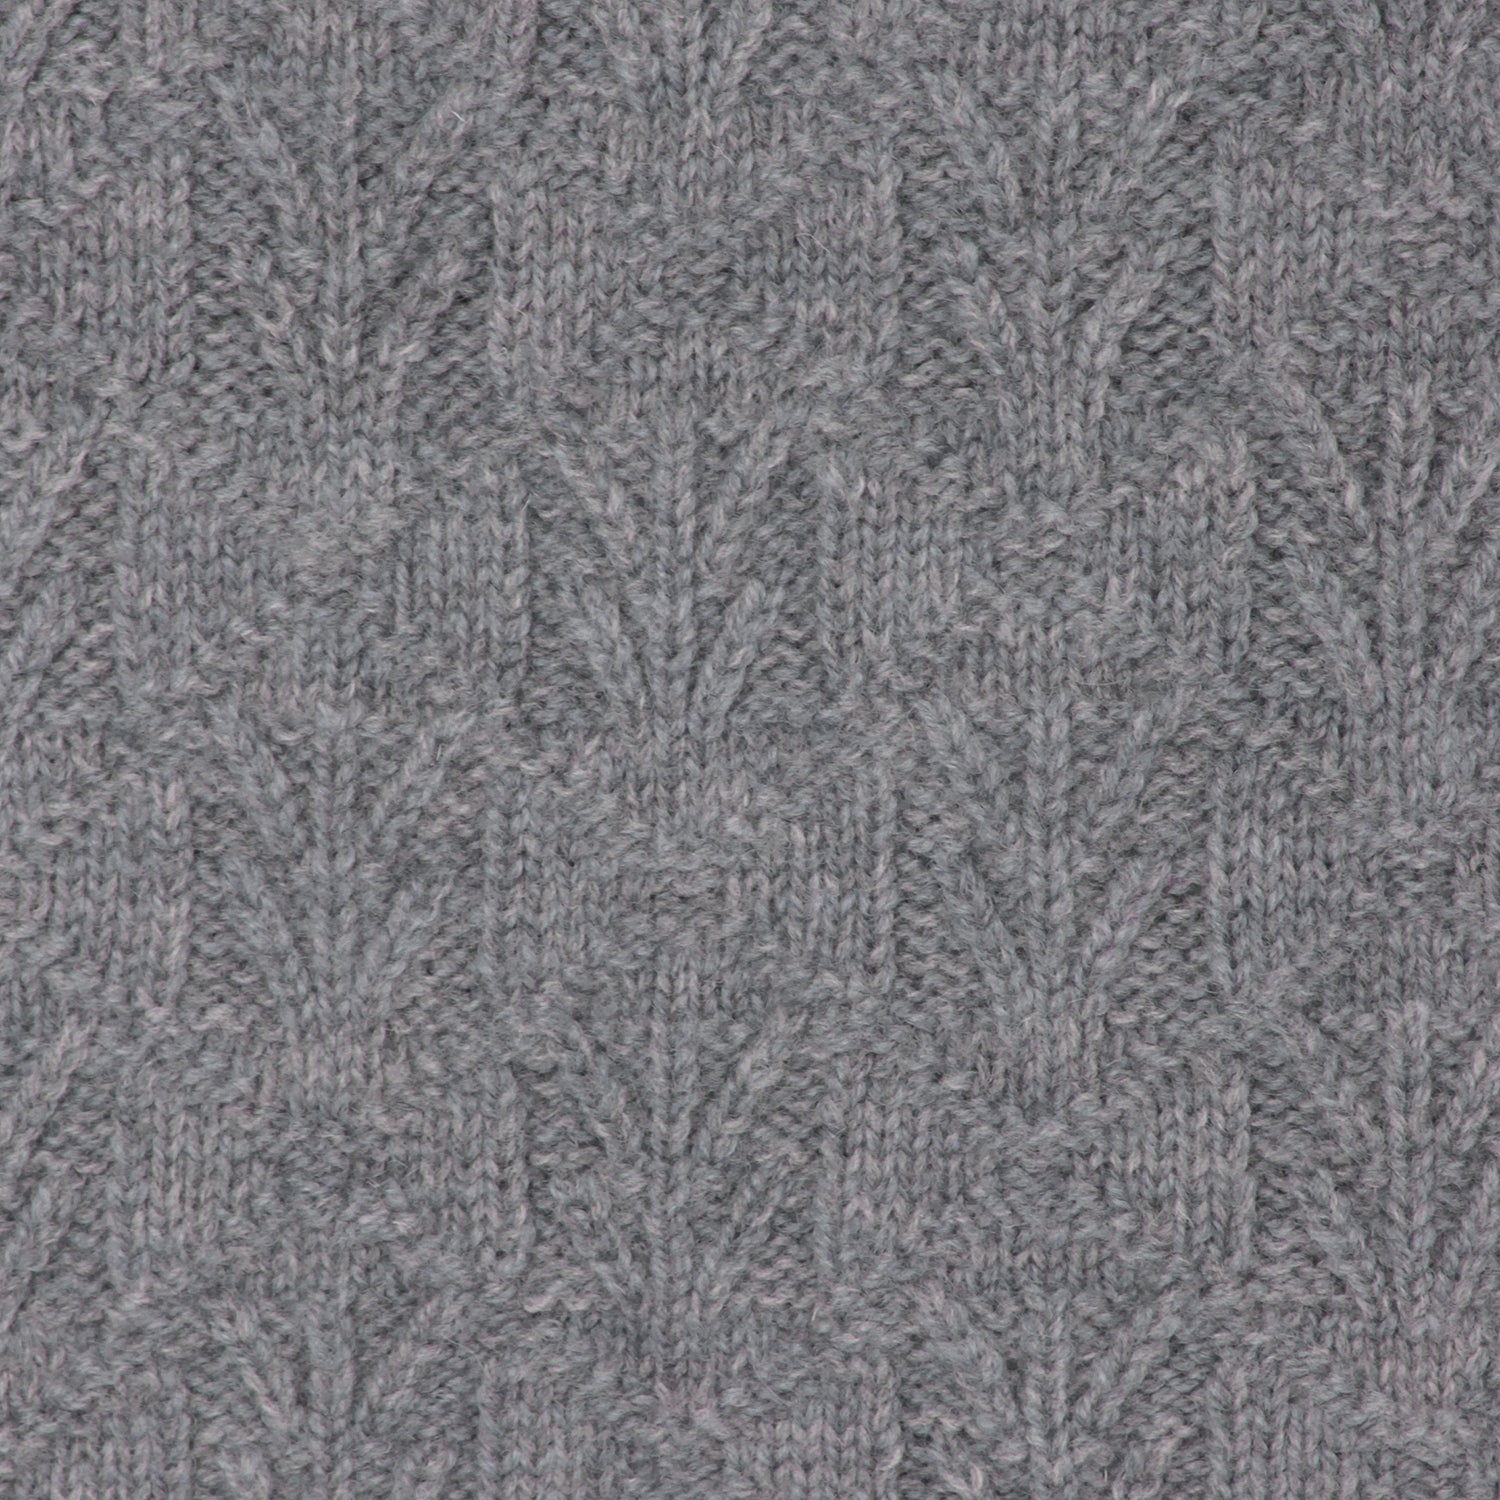 Knit Scarf / gray